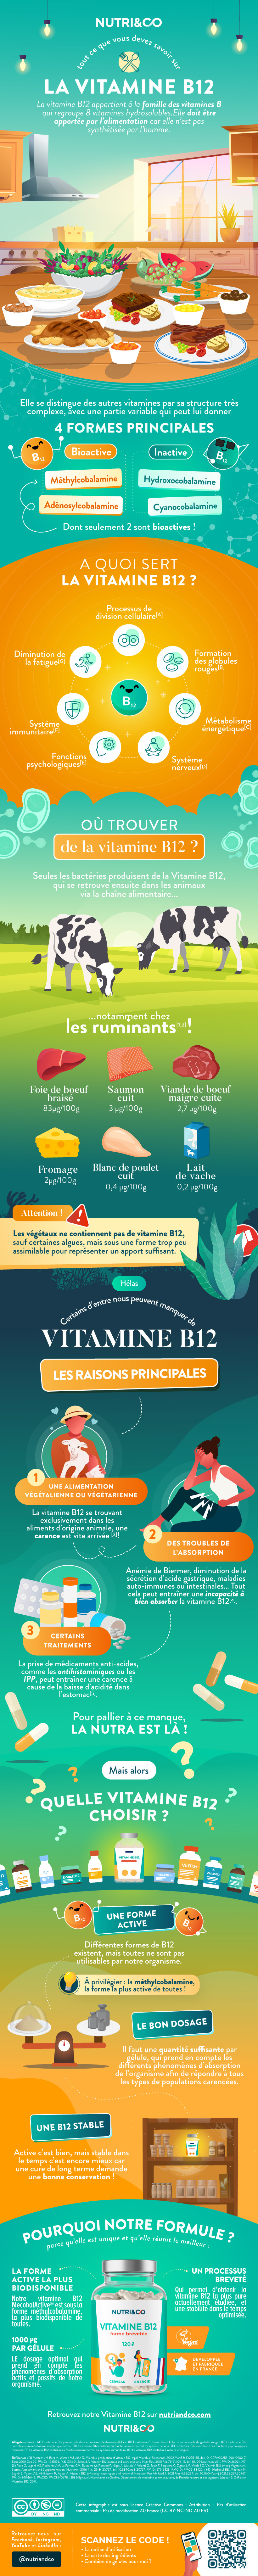 Infographie Vitamine B12